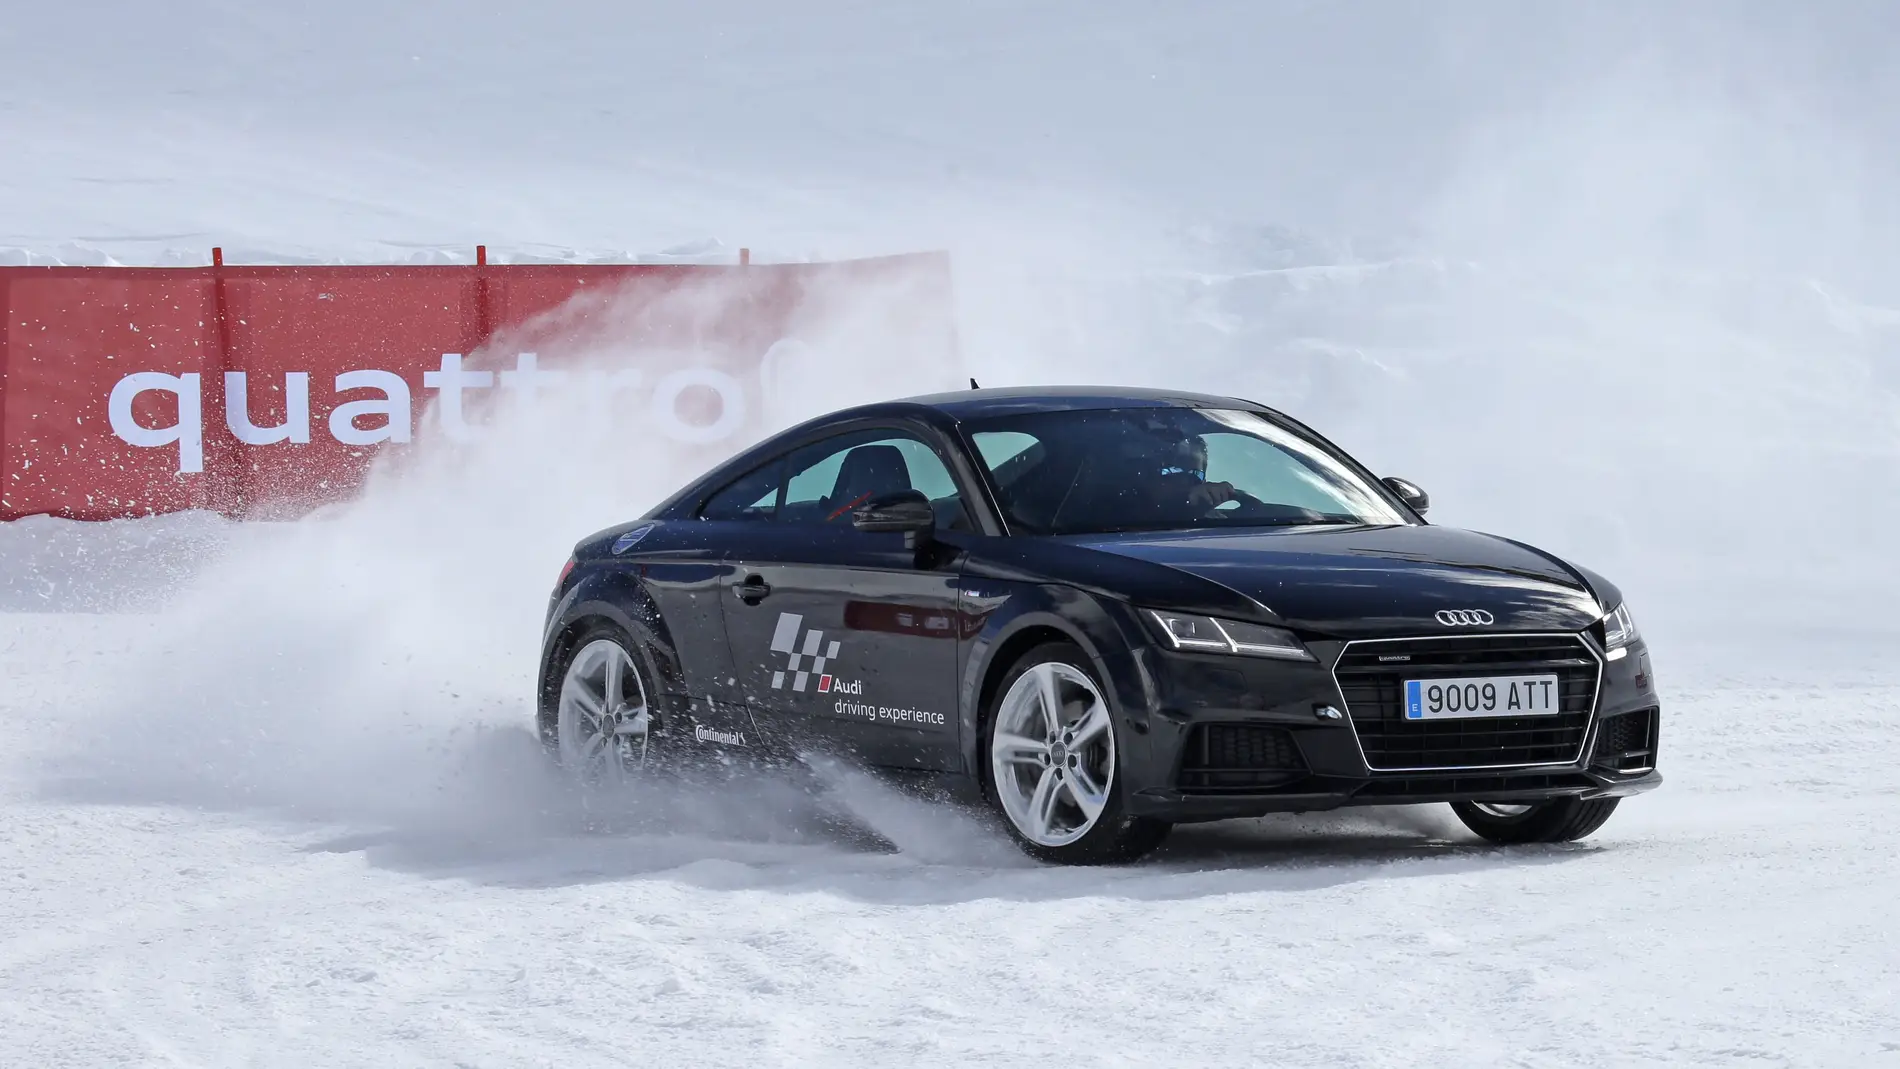 Audi-Winter-driving-experience-2017.jpg